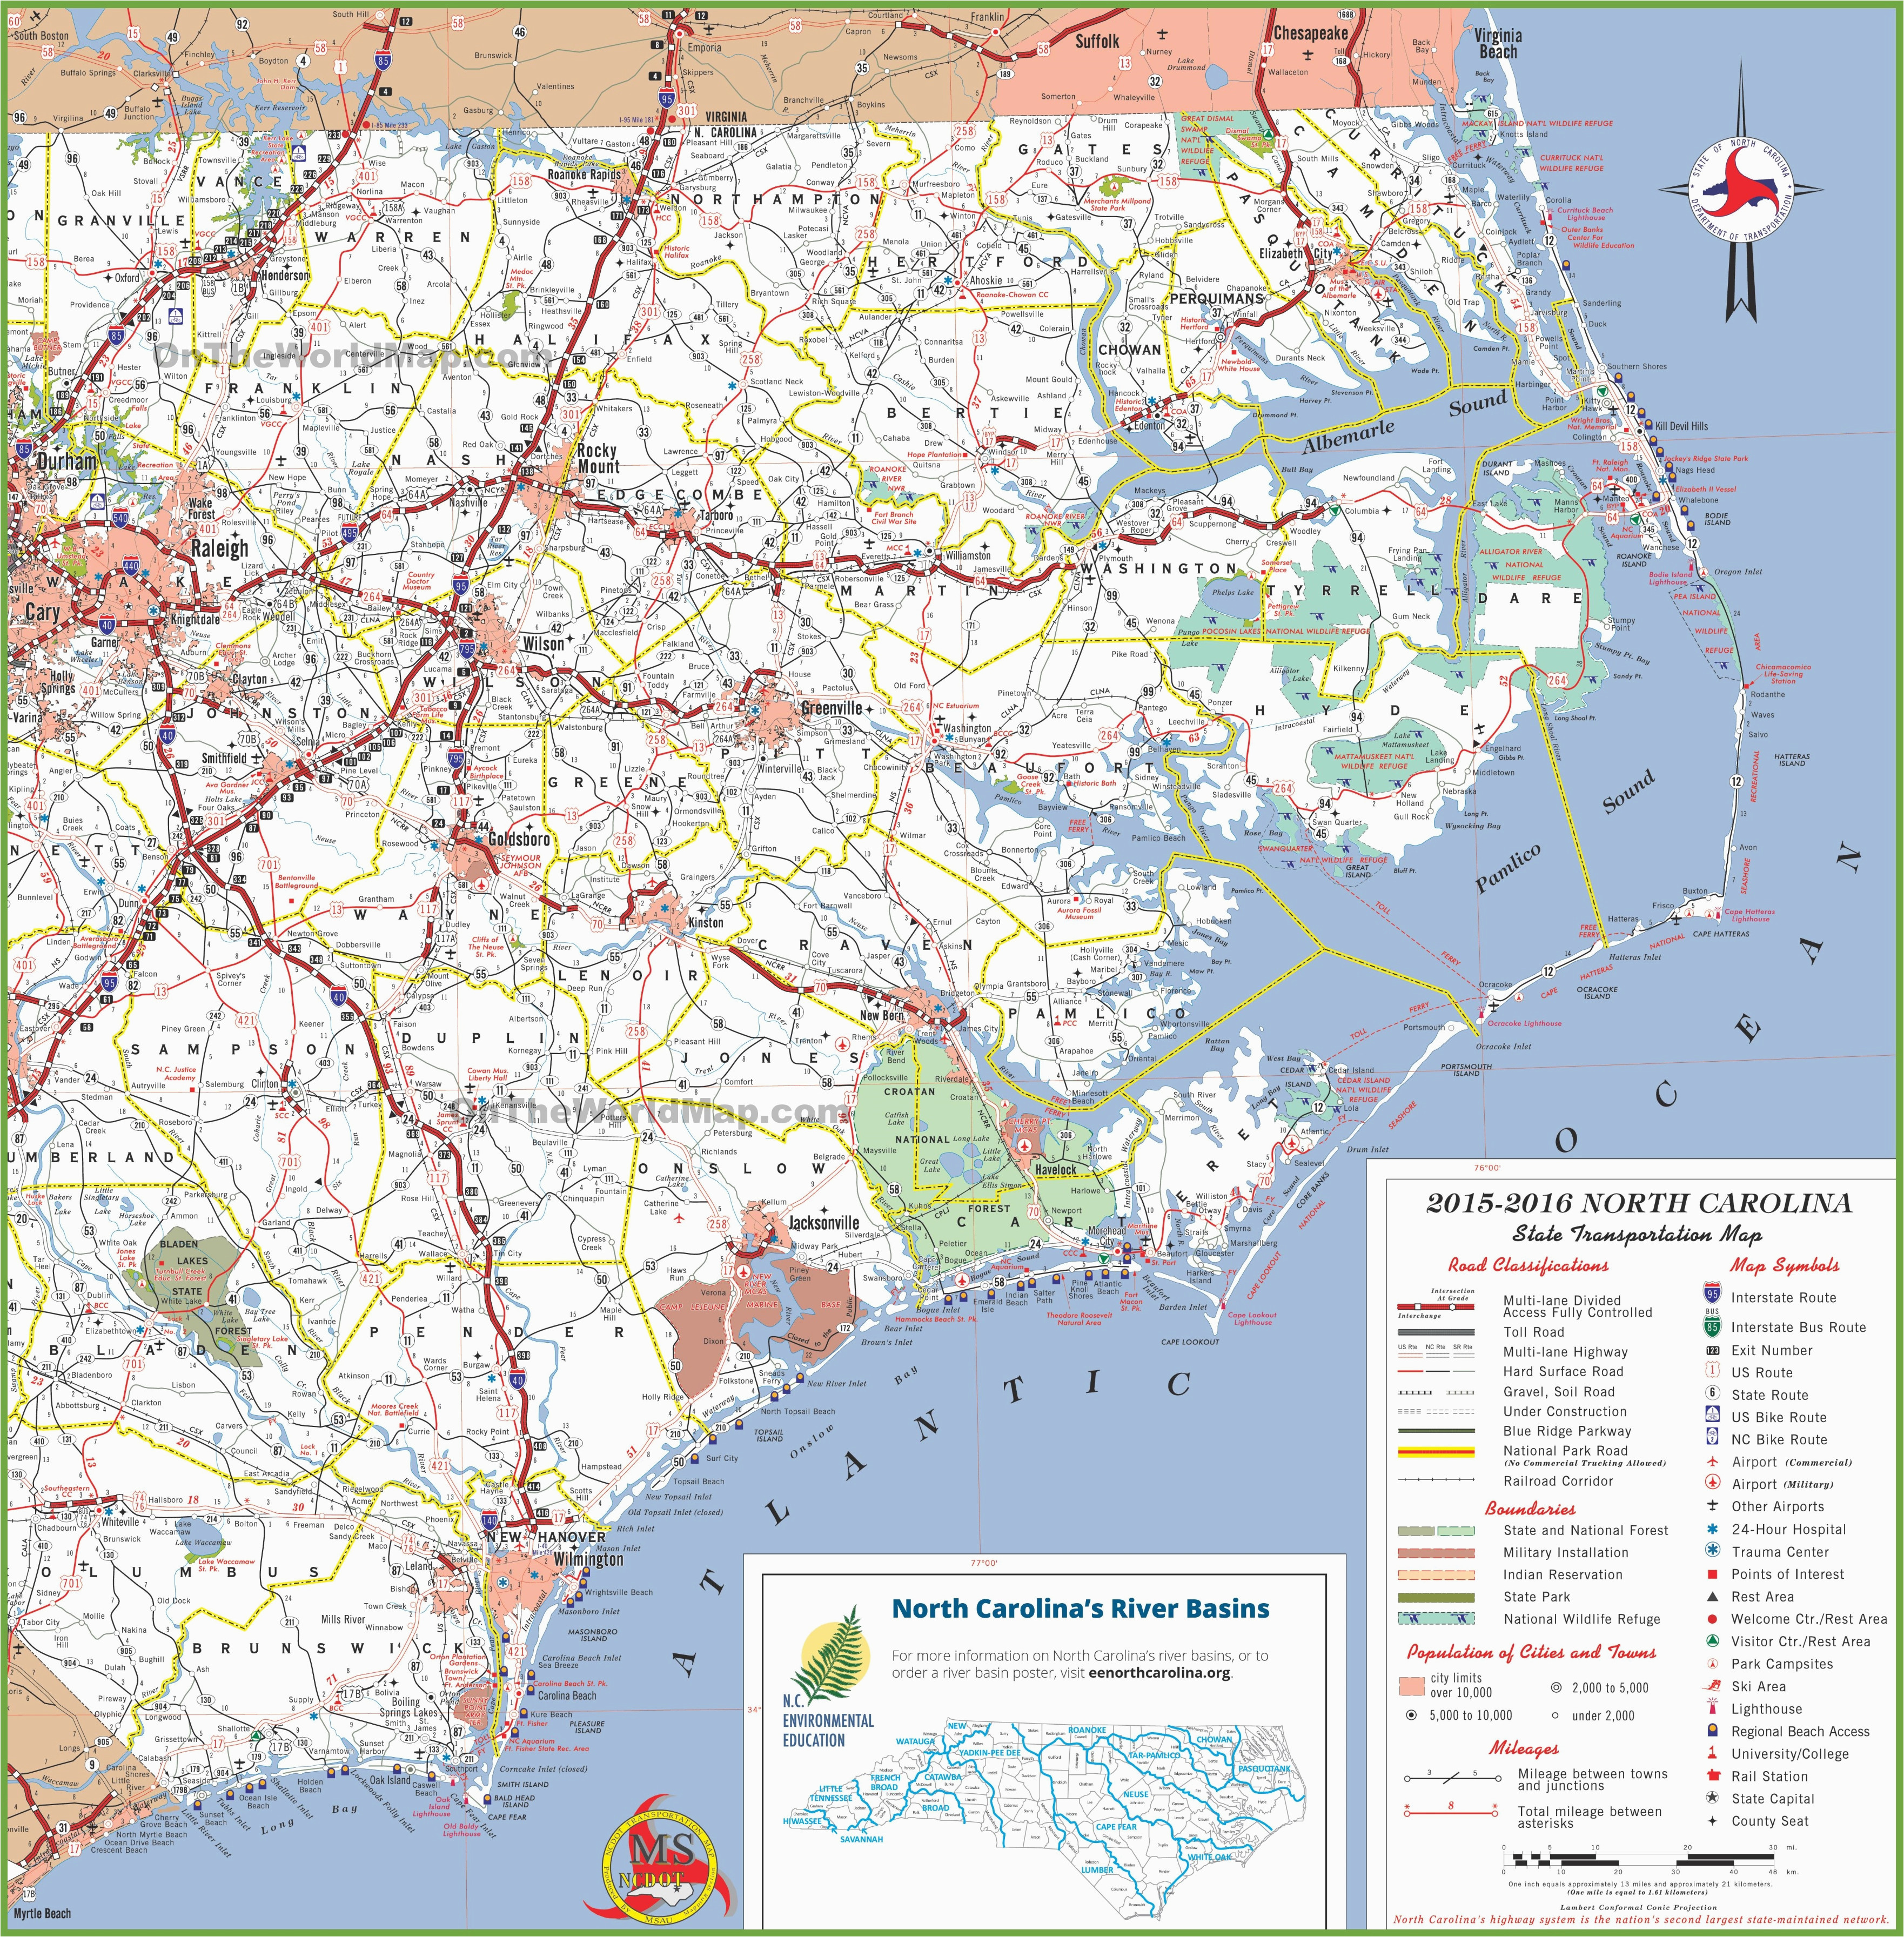 North Carolina Coastal Map with Cities north Carolina State Maps Usa Maps Of north Carolina Nc